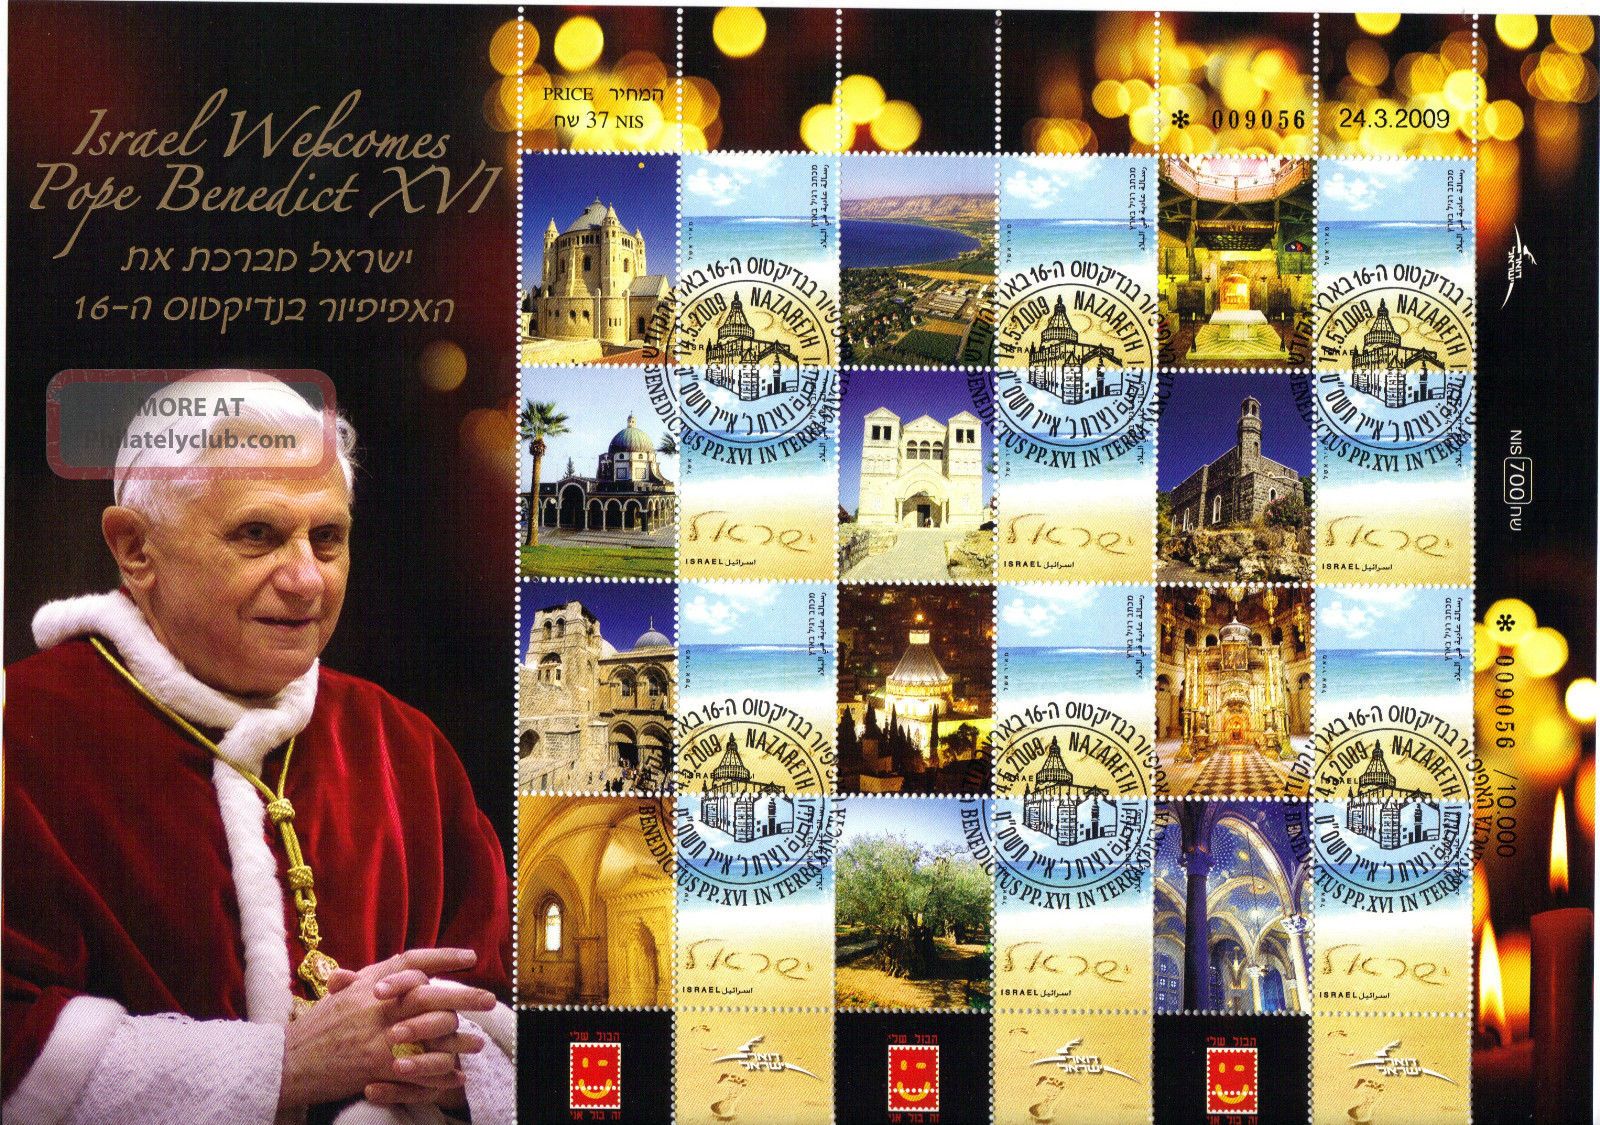 Israel Wellcome Pope Benedict Xvi 4.  5.  Na.  11.  5.  Je.  12.  5.  Je.  14.  5.  2009 Na. Middle East photo